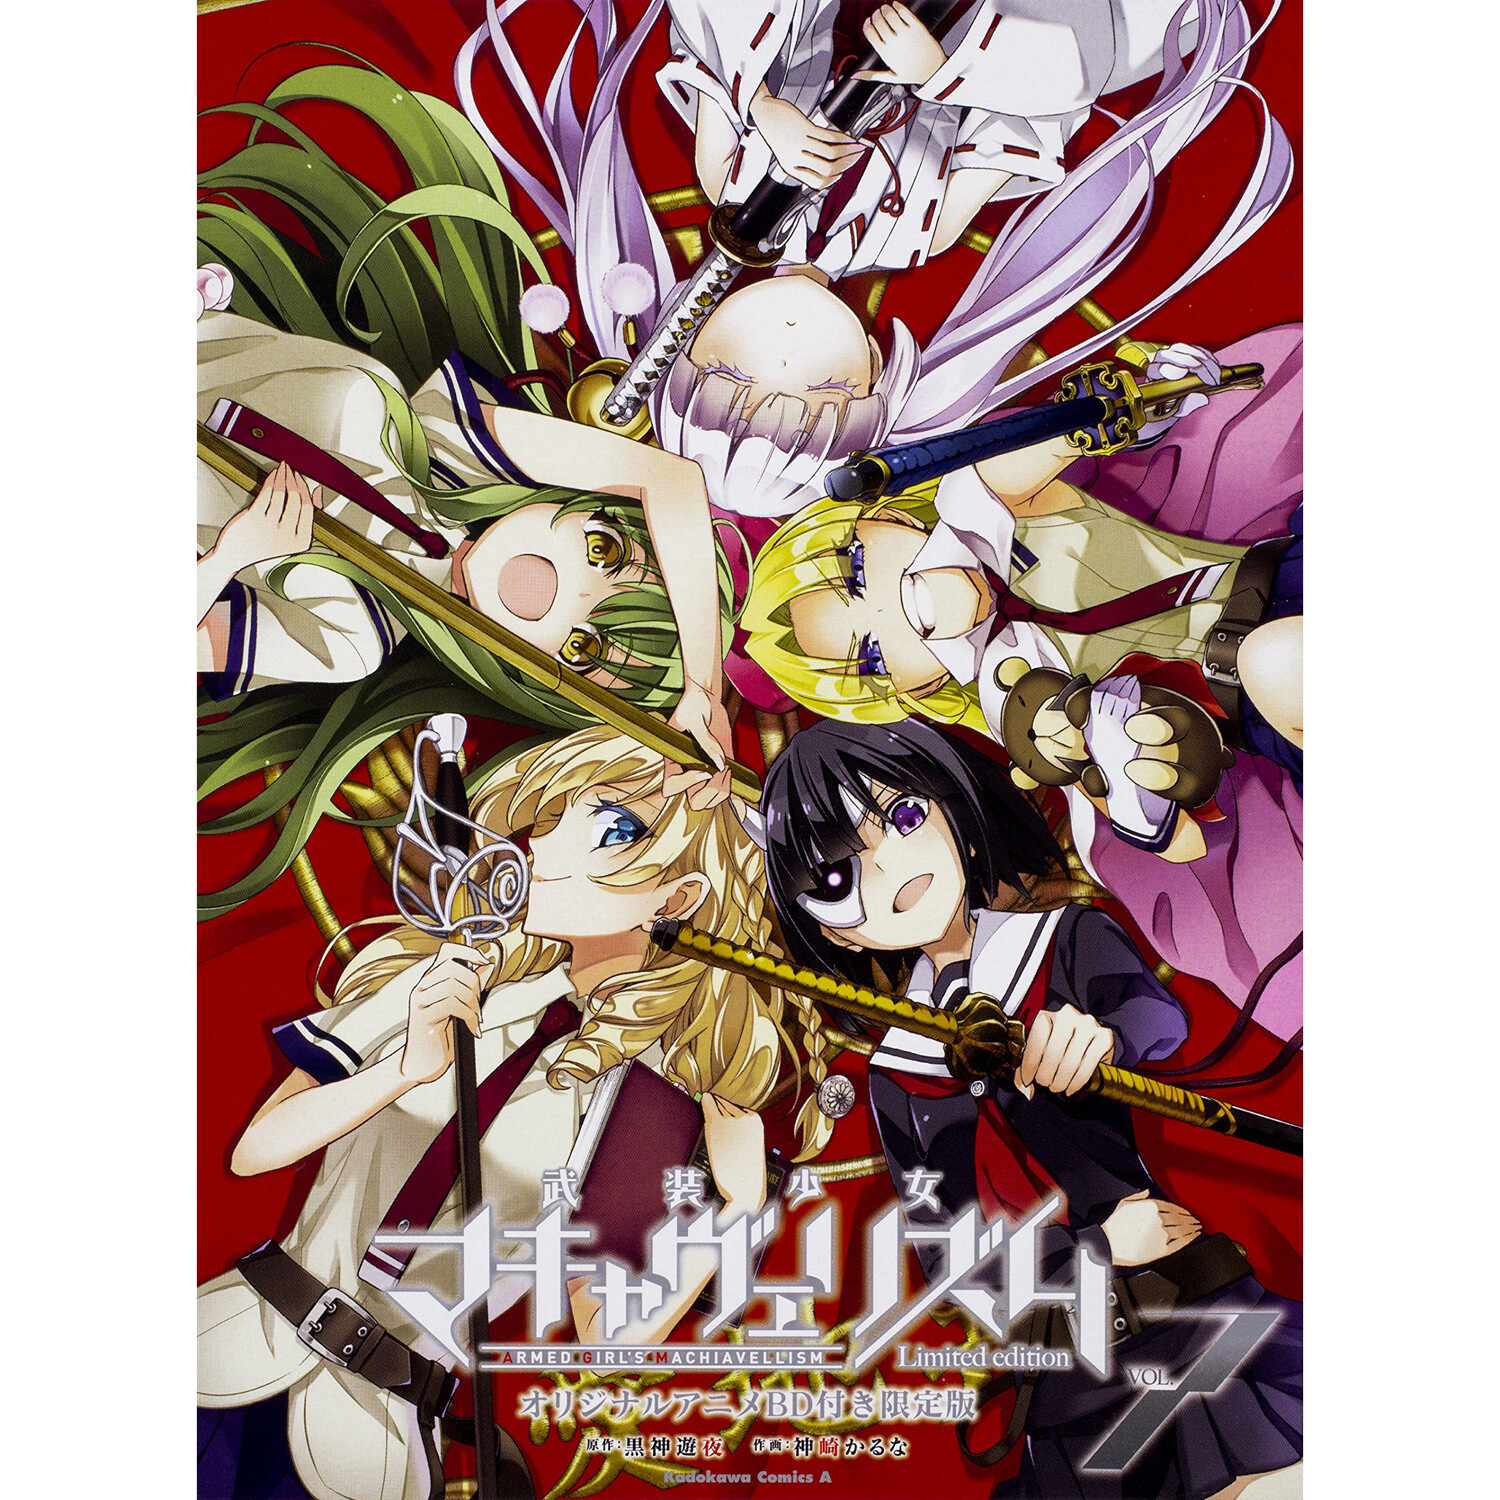 Armed Girl S Machiavellism Vol 7 Limited Edition W Original Anime Blu